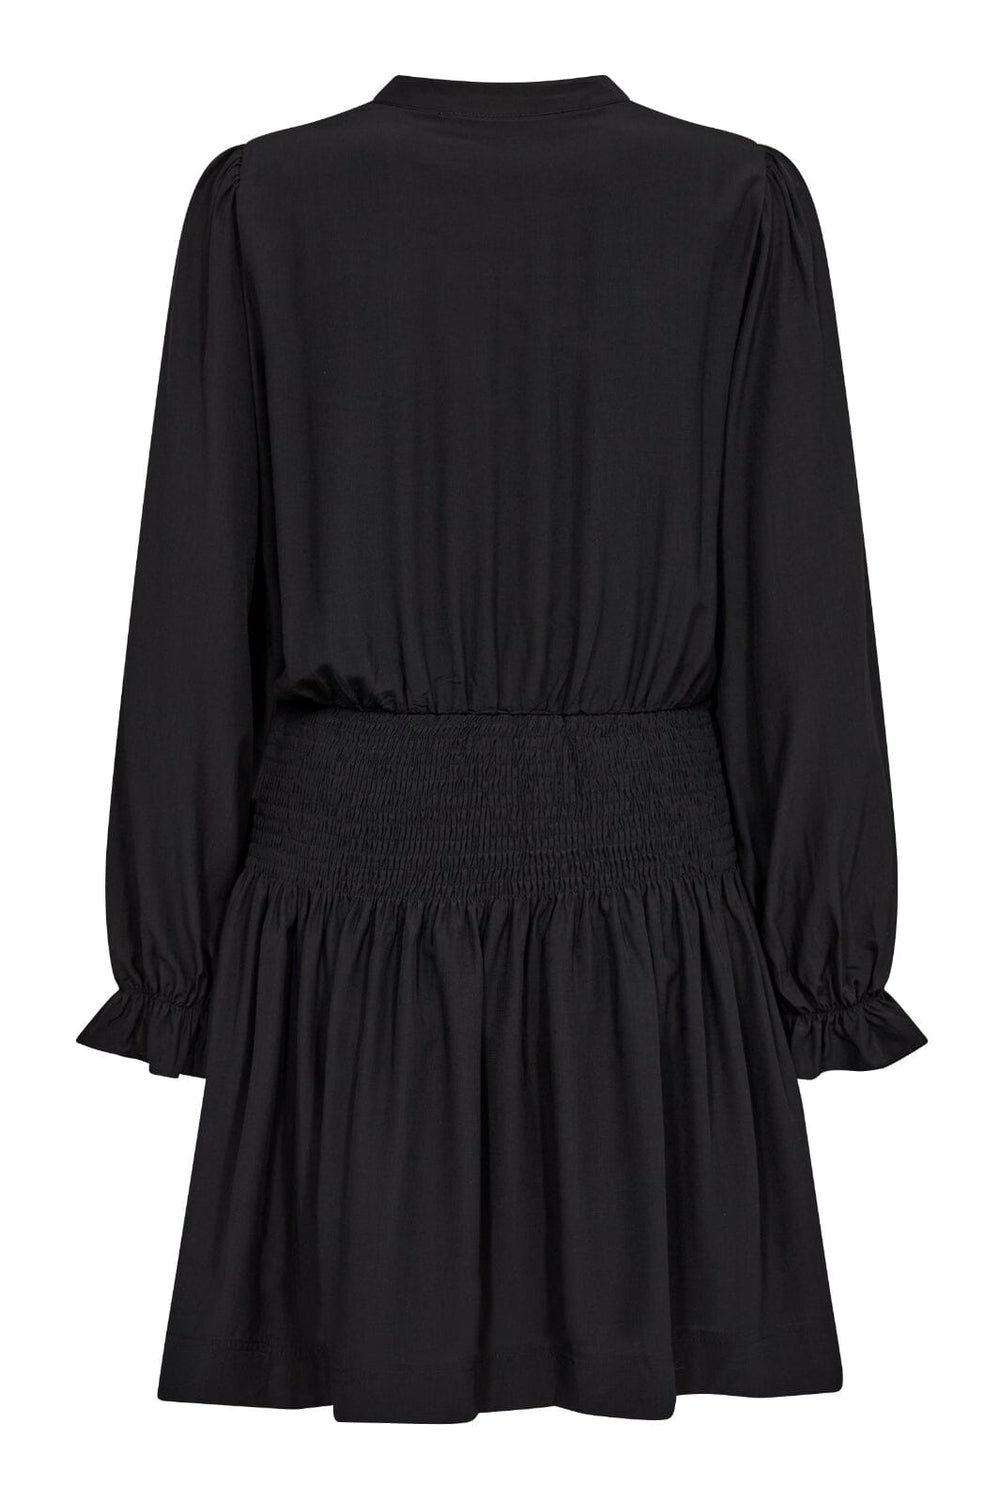 Co´couture - Sunaricc Lace Smock Dress 36290 - 96 Black Kjoler 